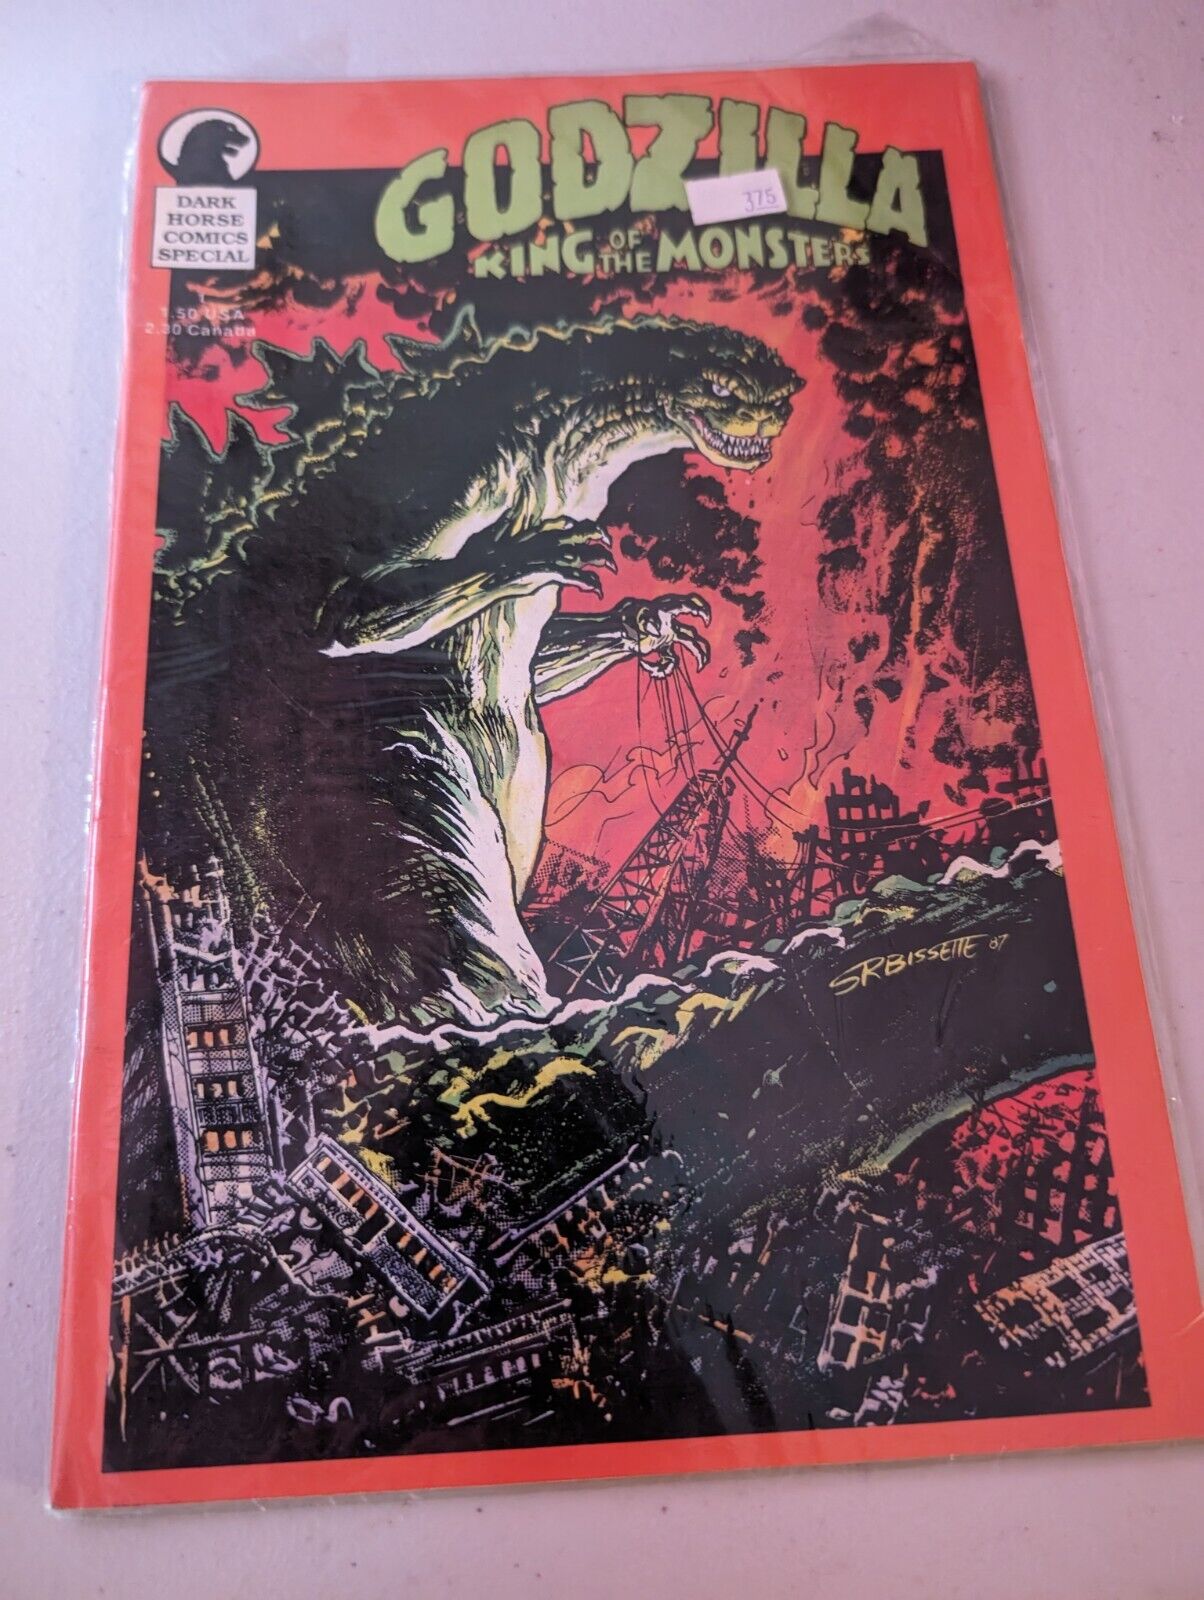 Godzilla King Of The Monsters 1987 Dark Horse Comics Special (Hi-Grade) VF+